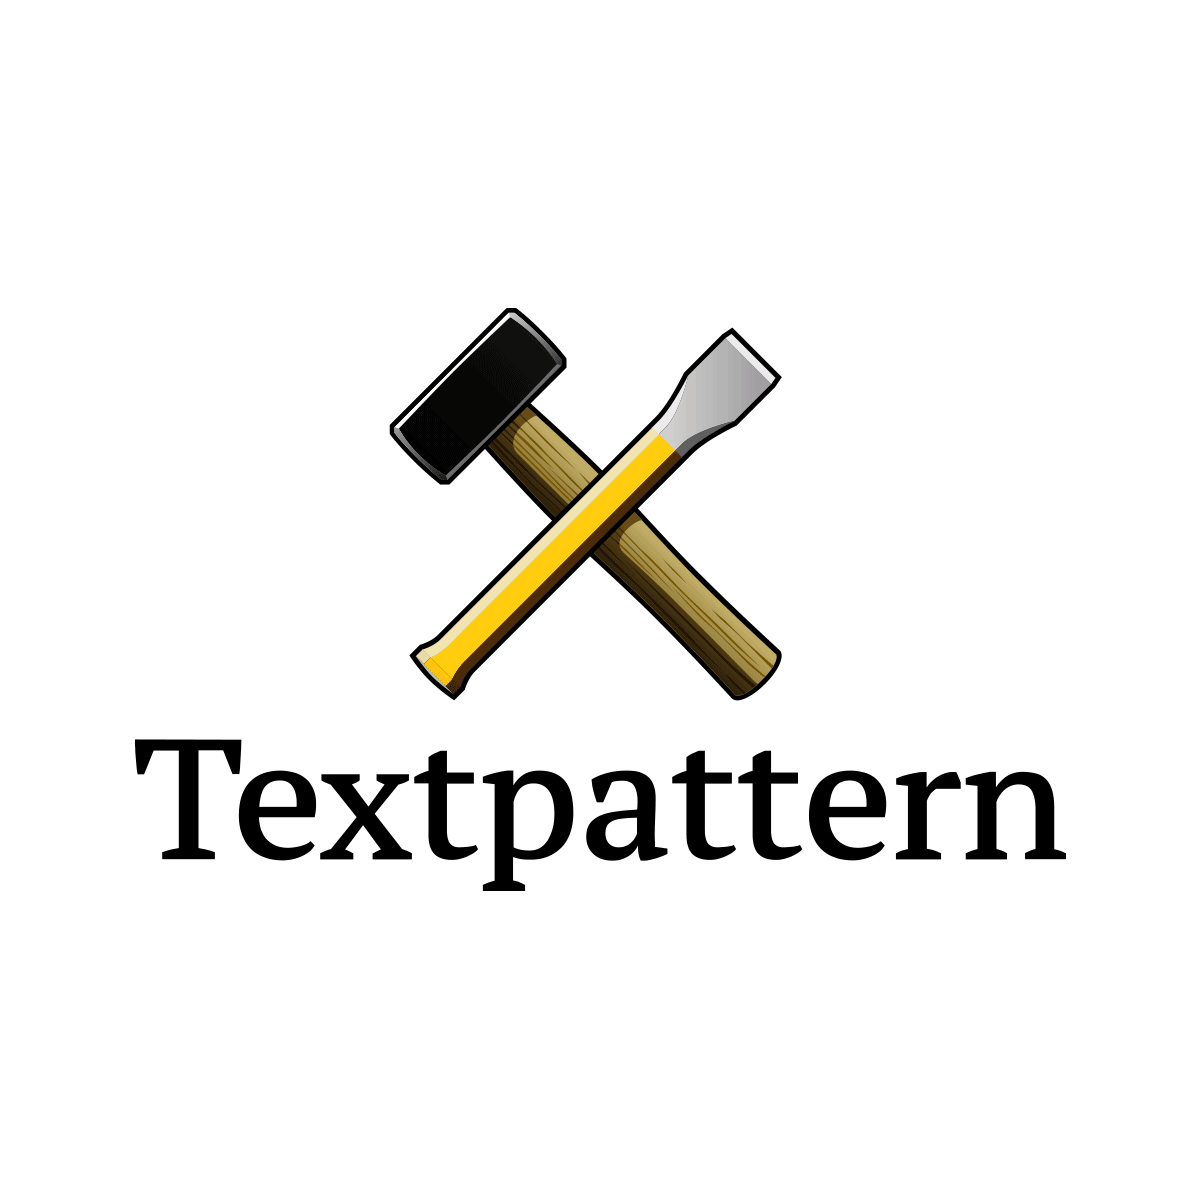 TextPattern